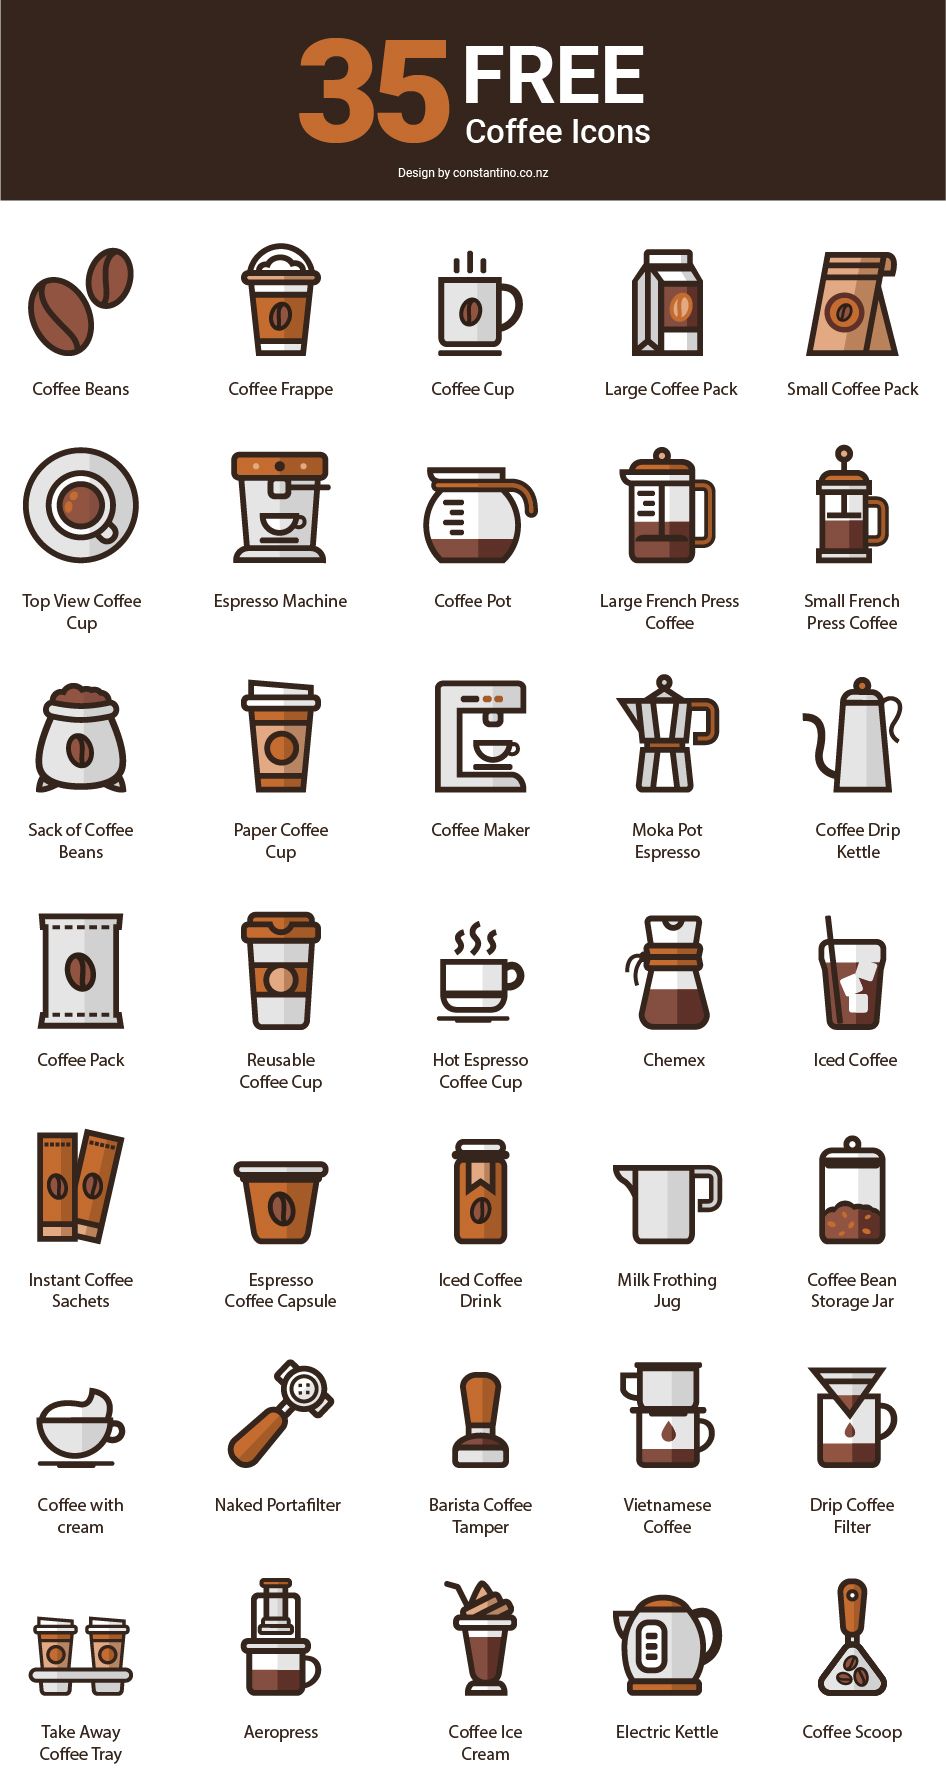 Free coffee icon design full list